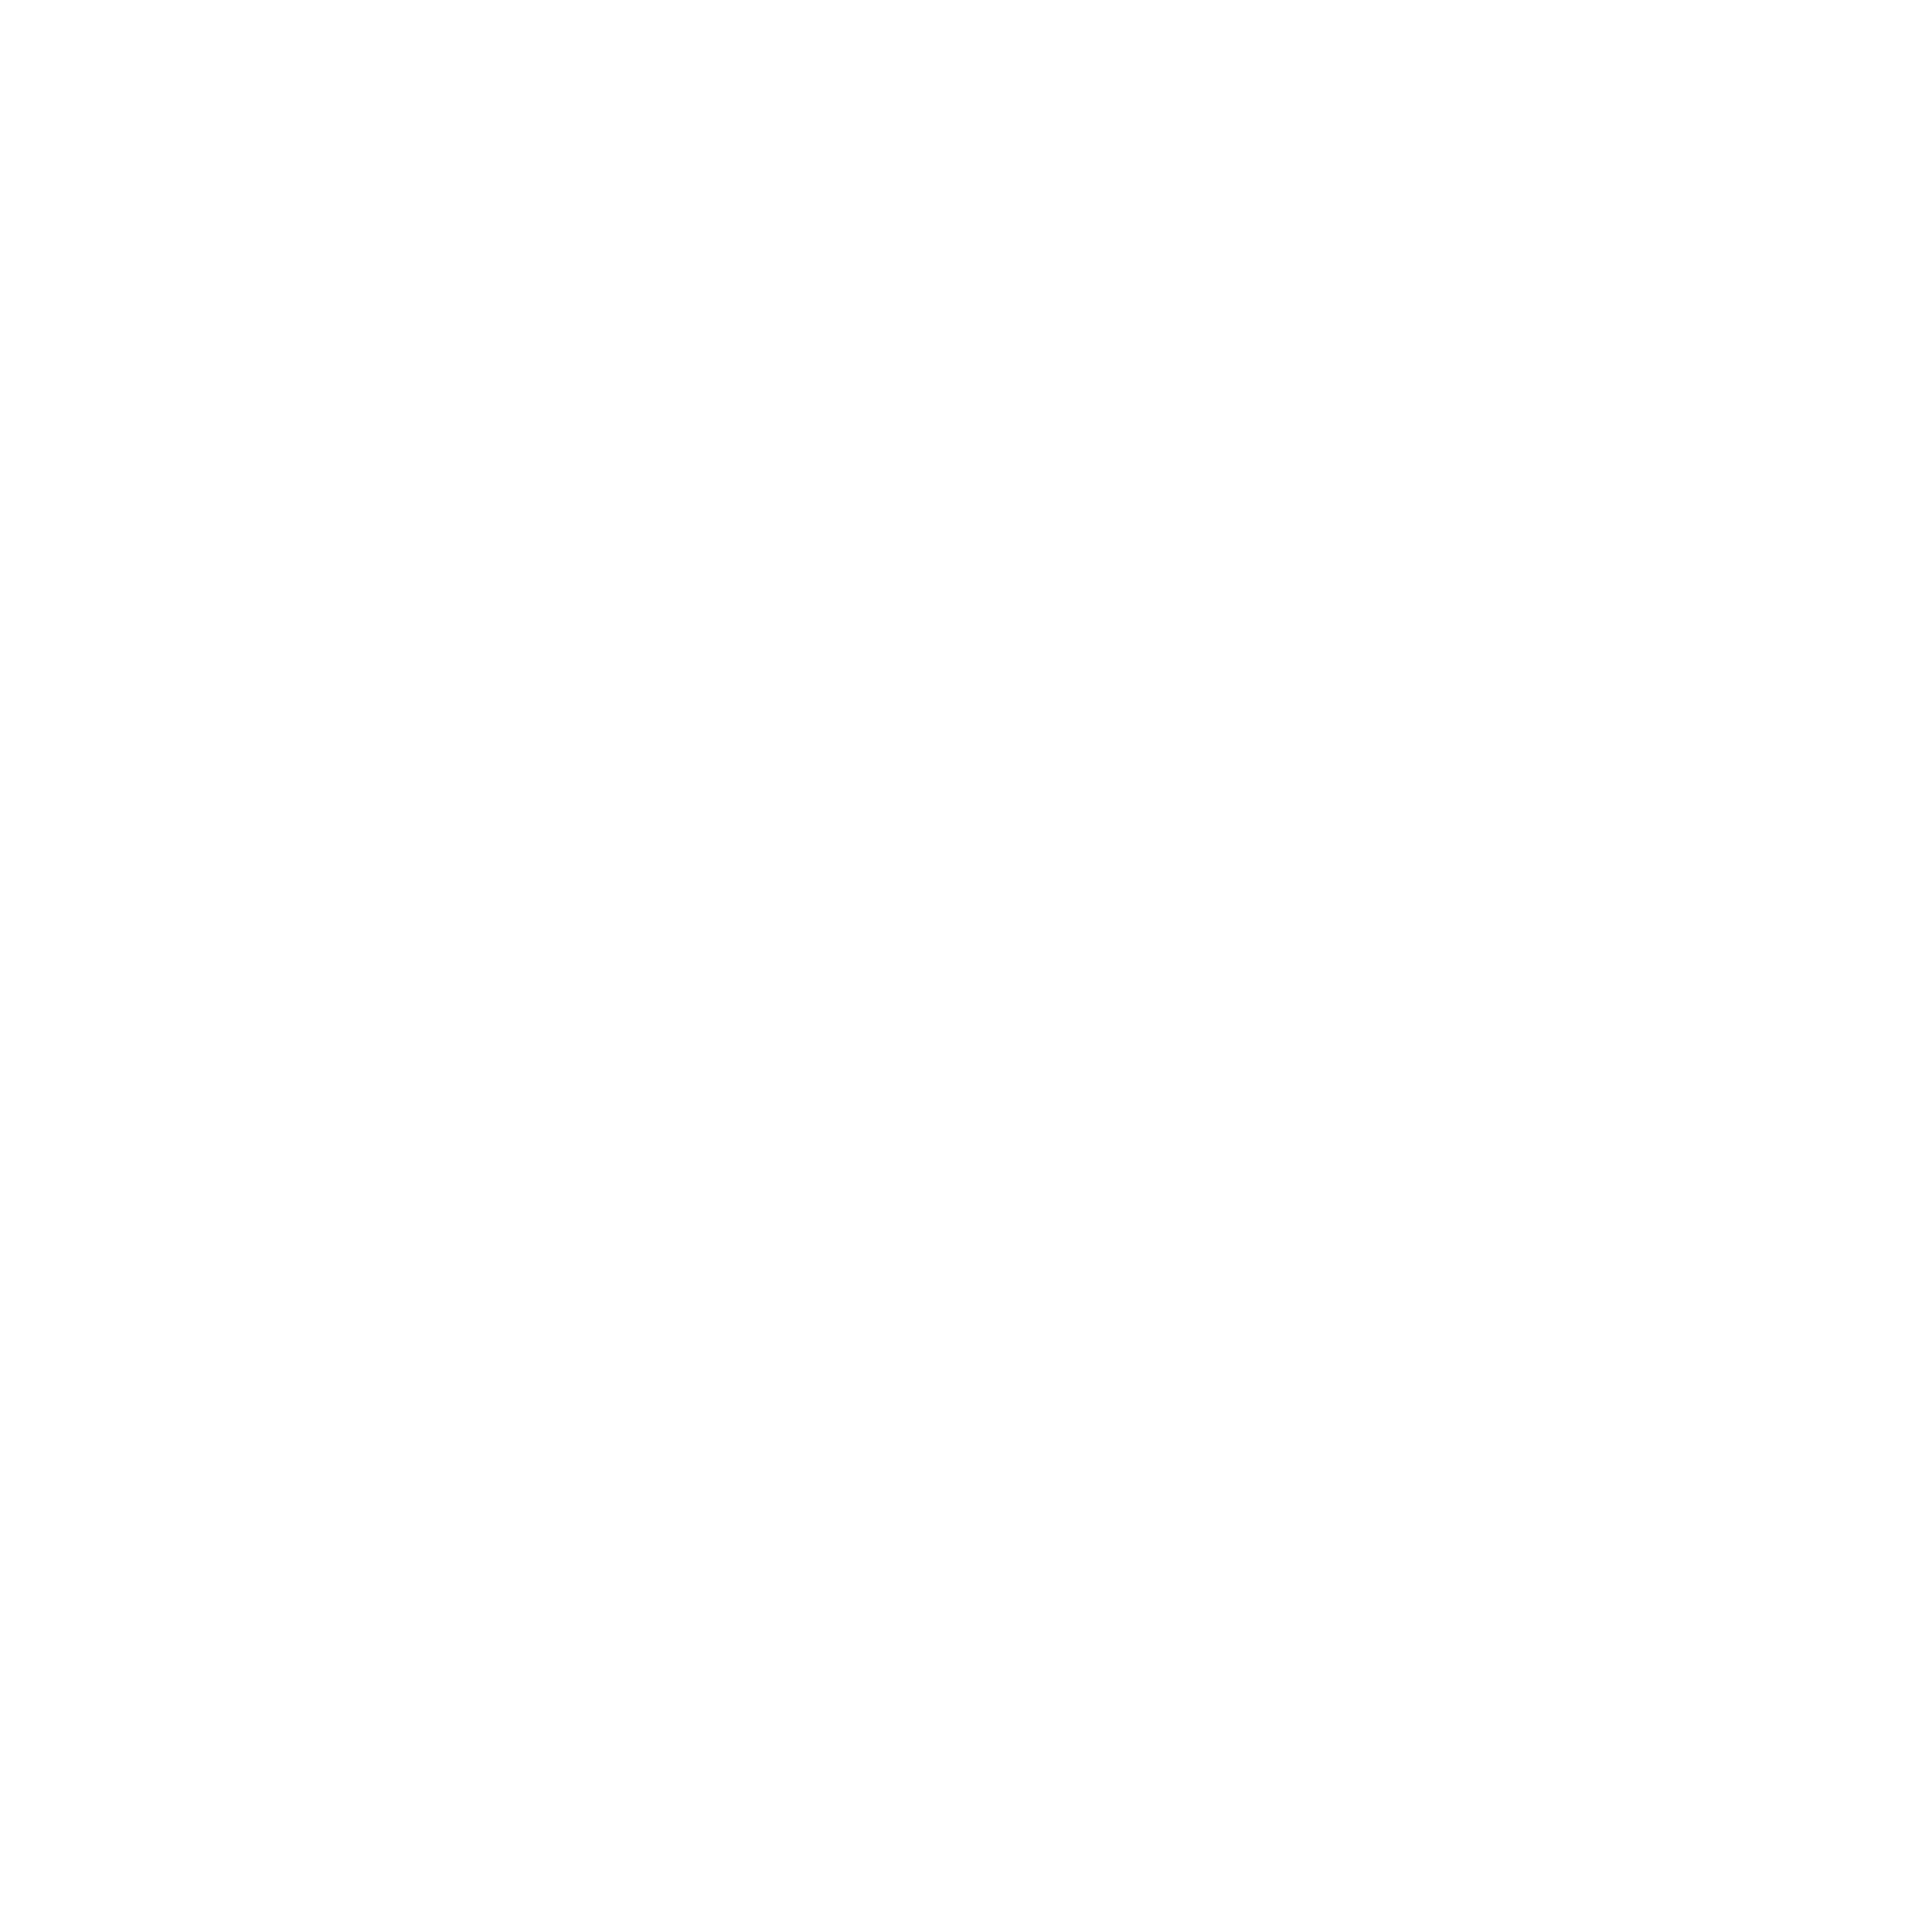 Safari Christian Business Alliance